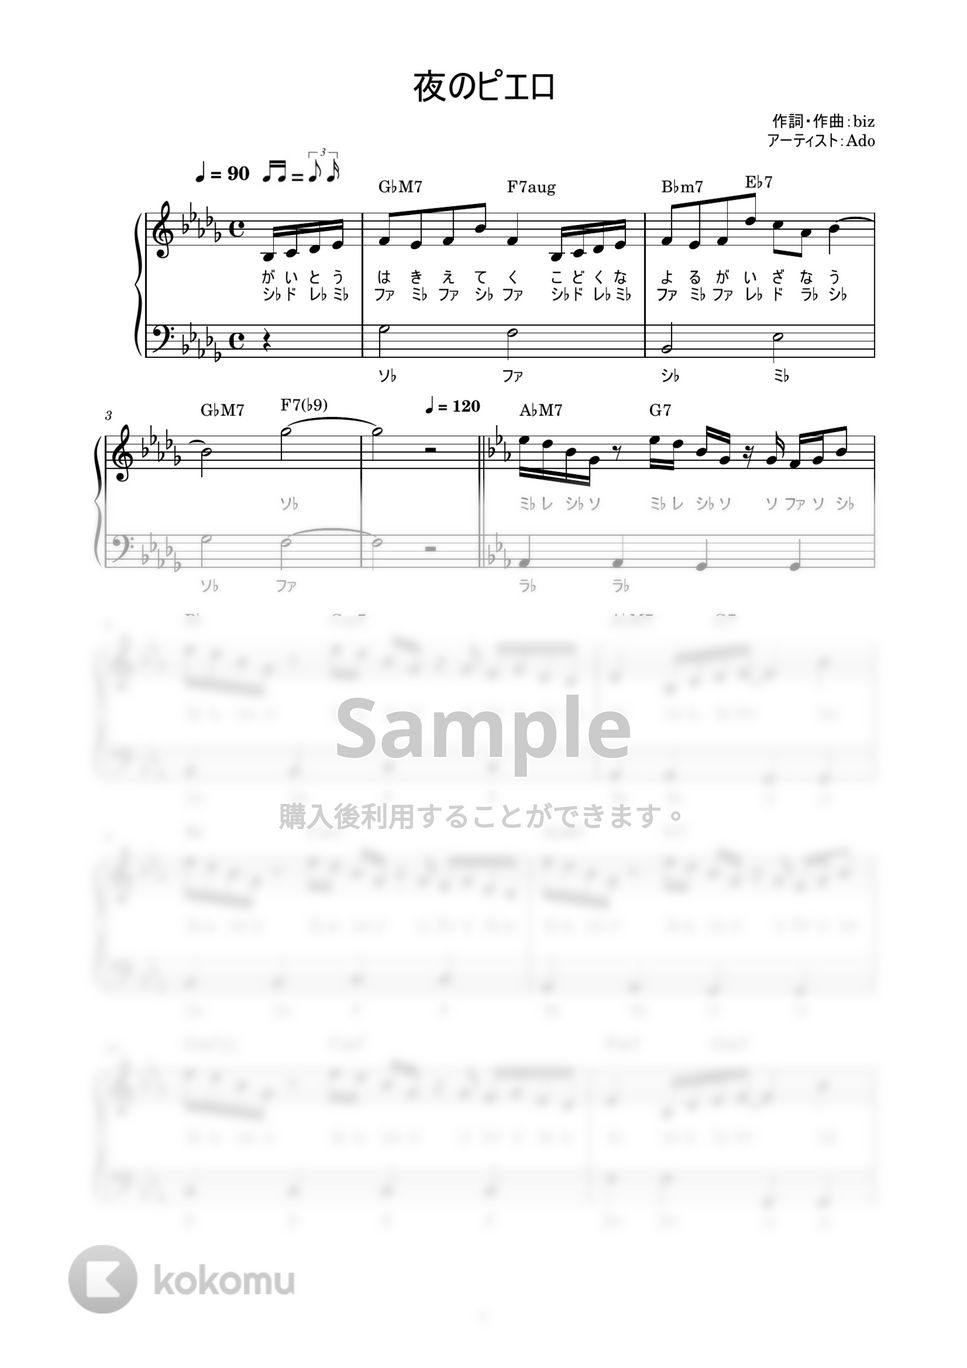 Ado - 夜のピエロ (かんたん / 歌詞付き / ドレミ付き / 初心者) by piano.tokyo